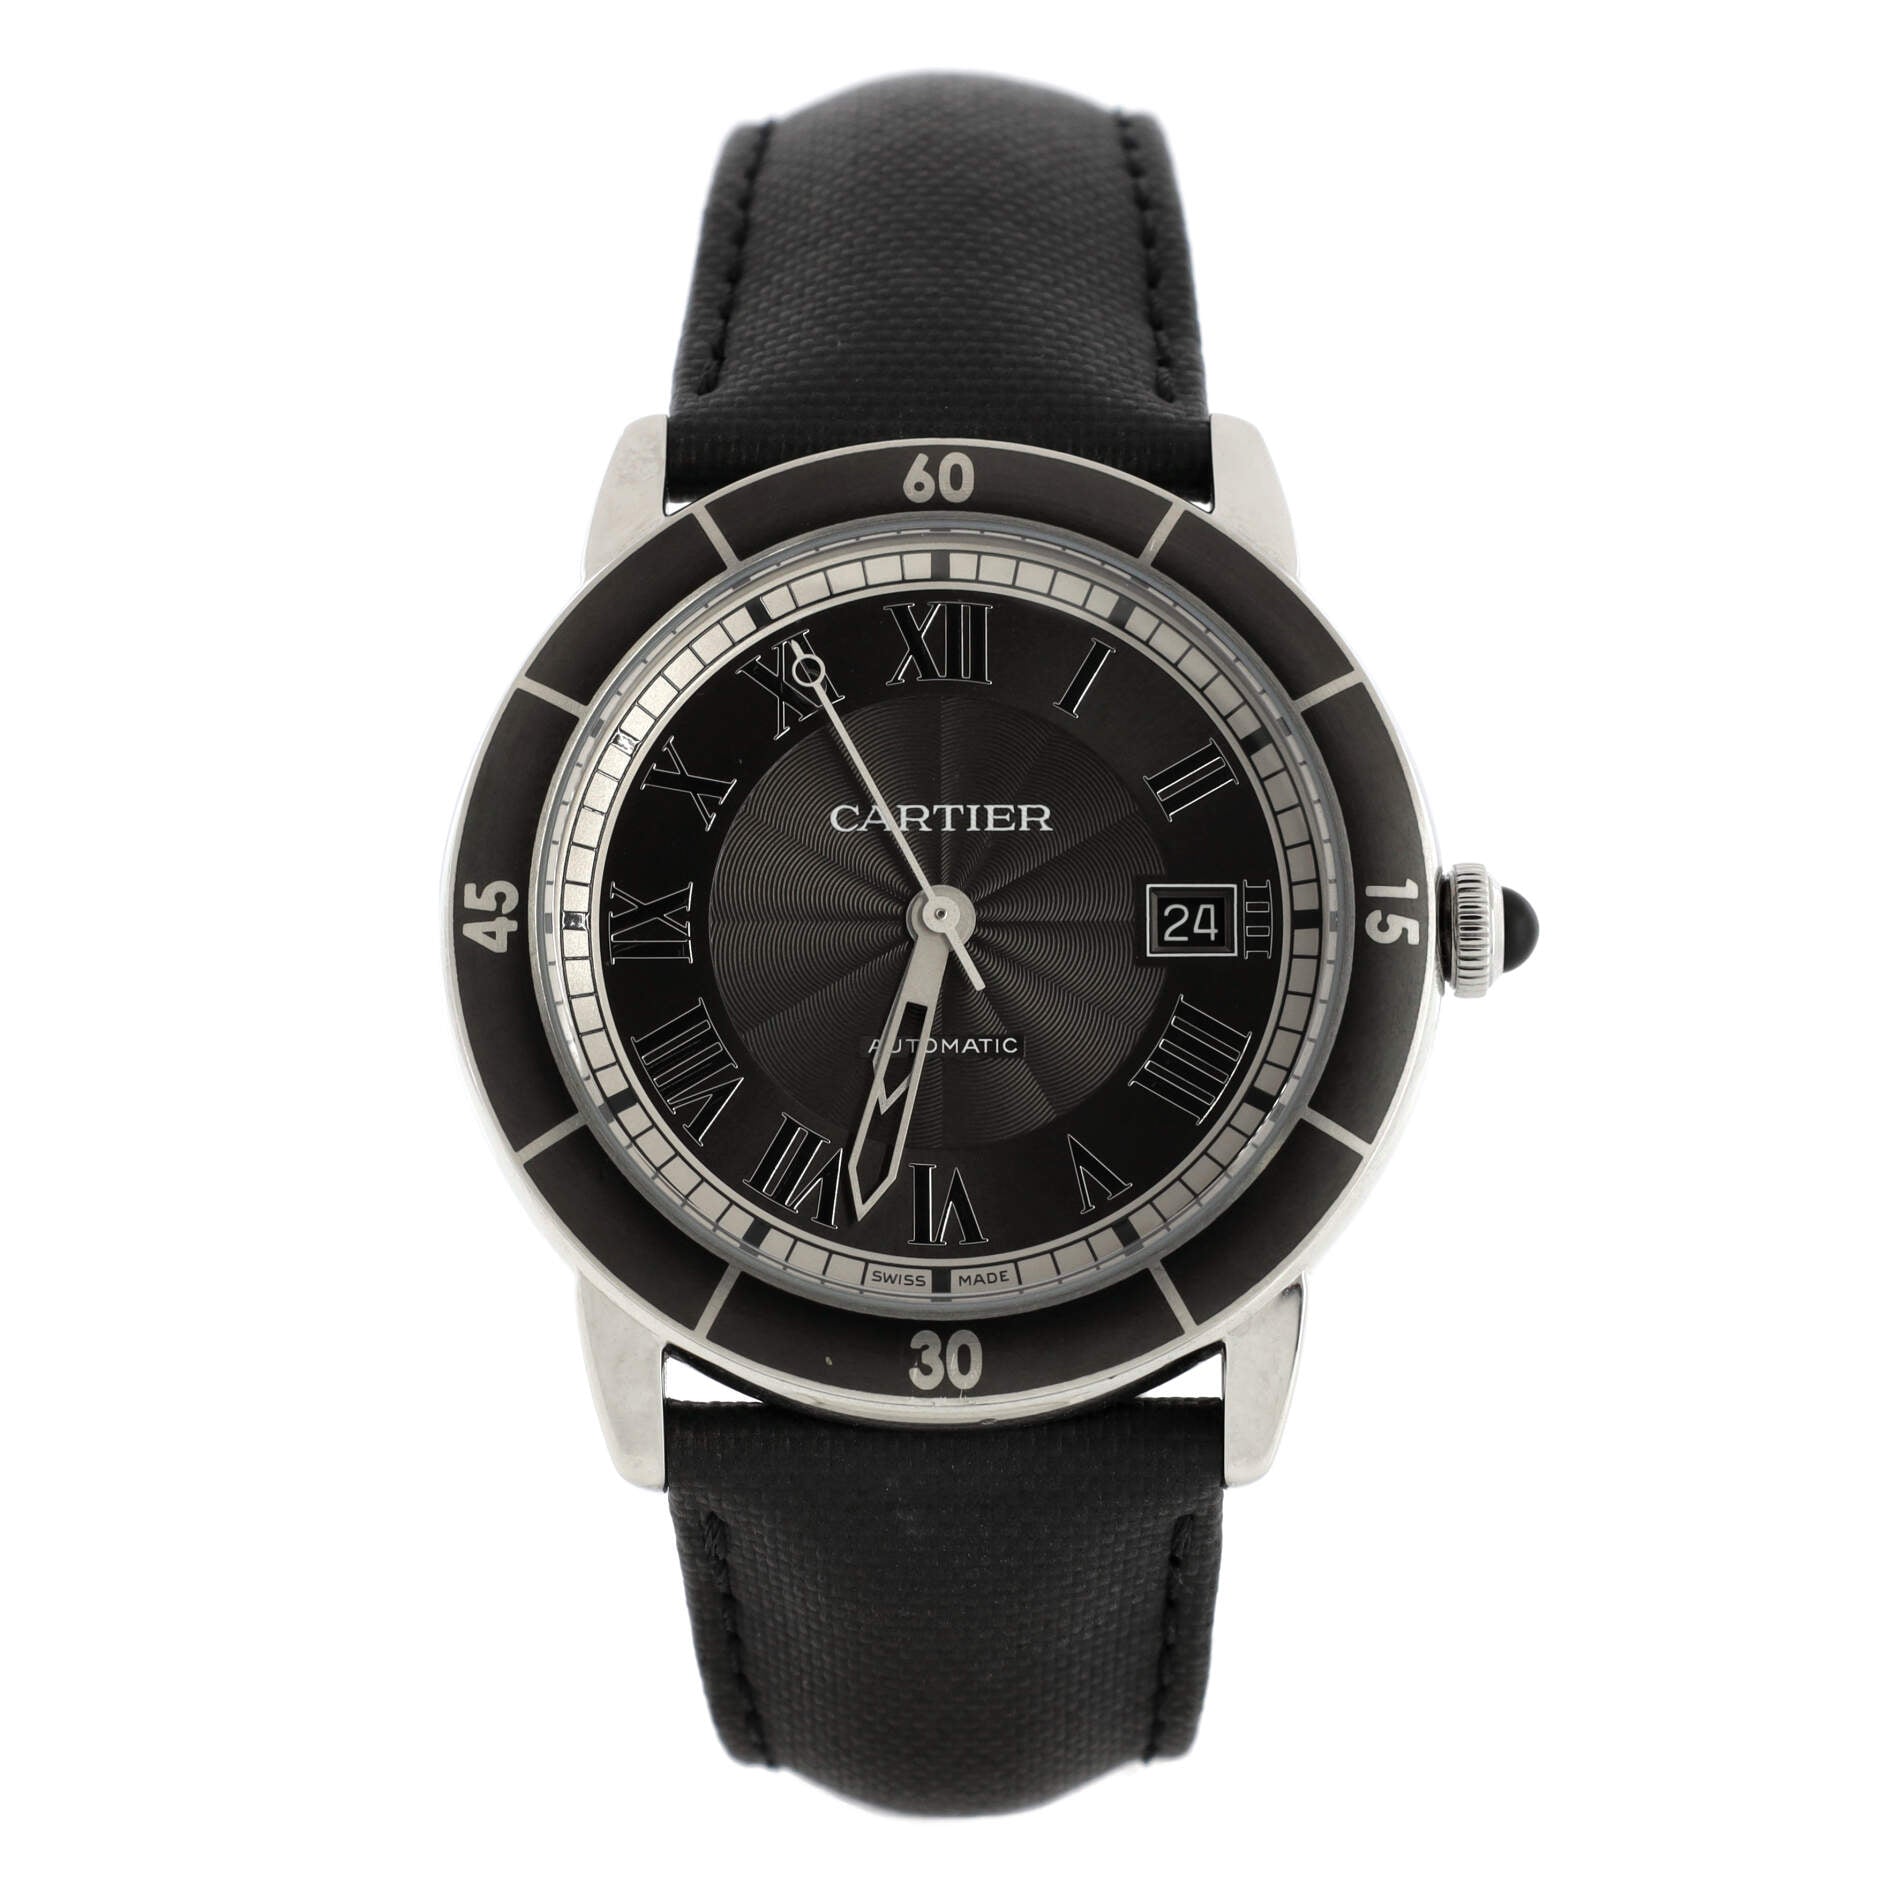 Ronde Croisiere de Cartier Automatic Watch (WSRN0002)